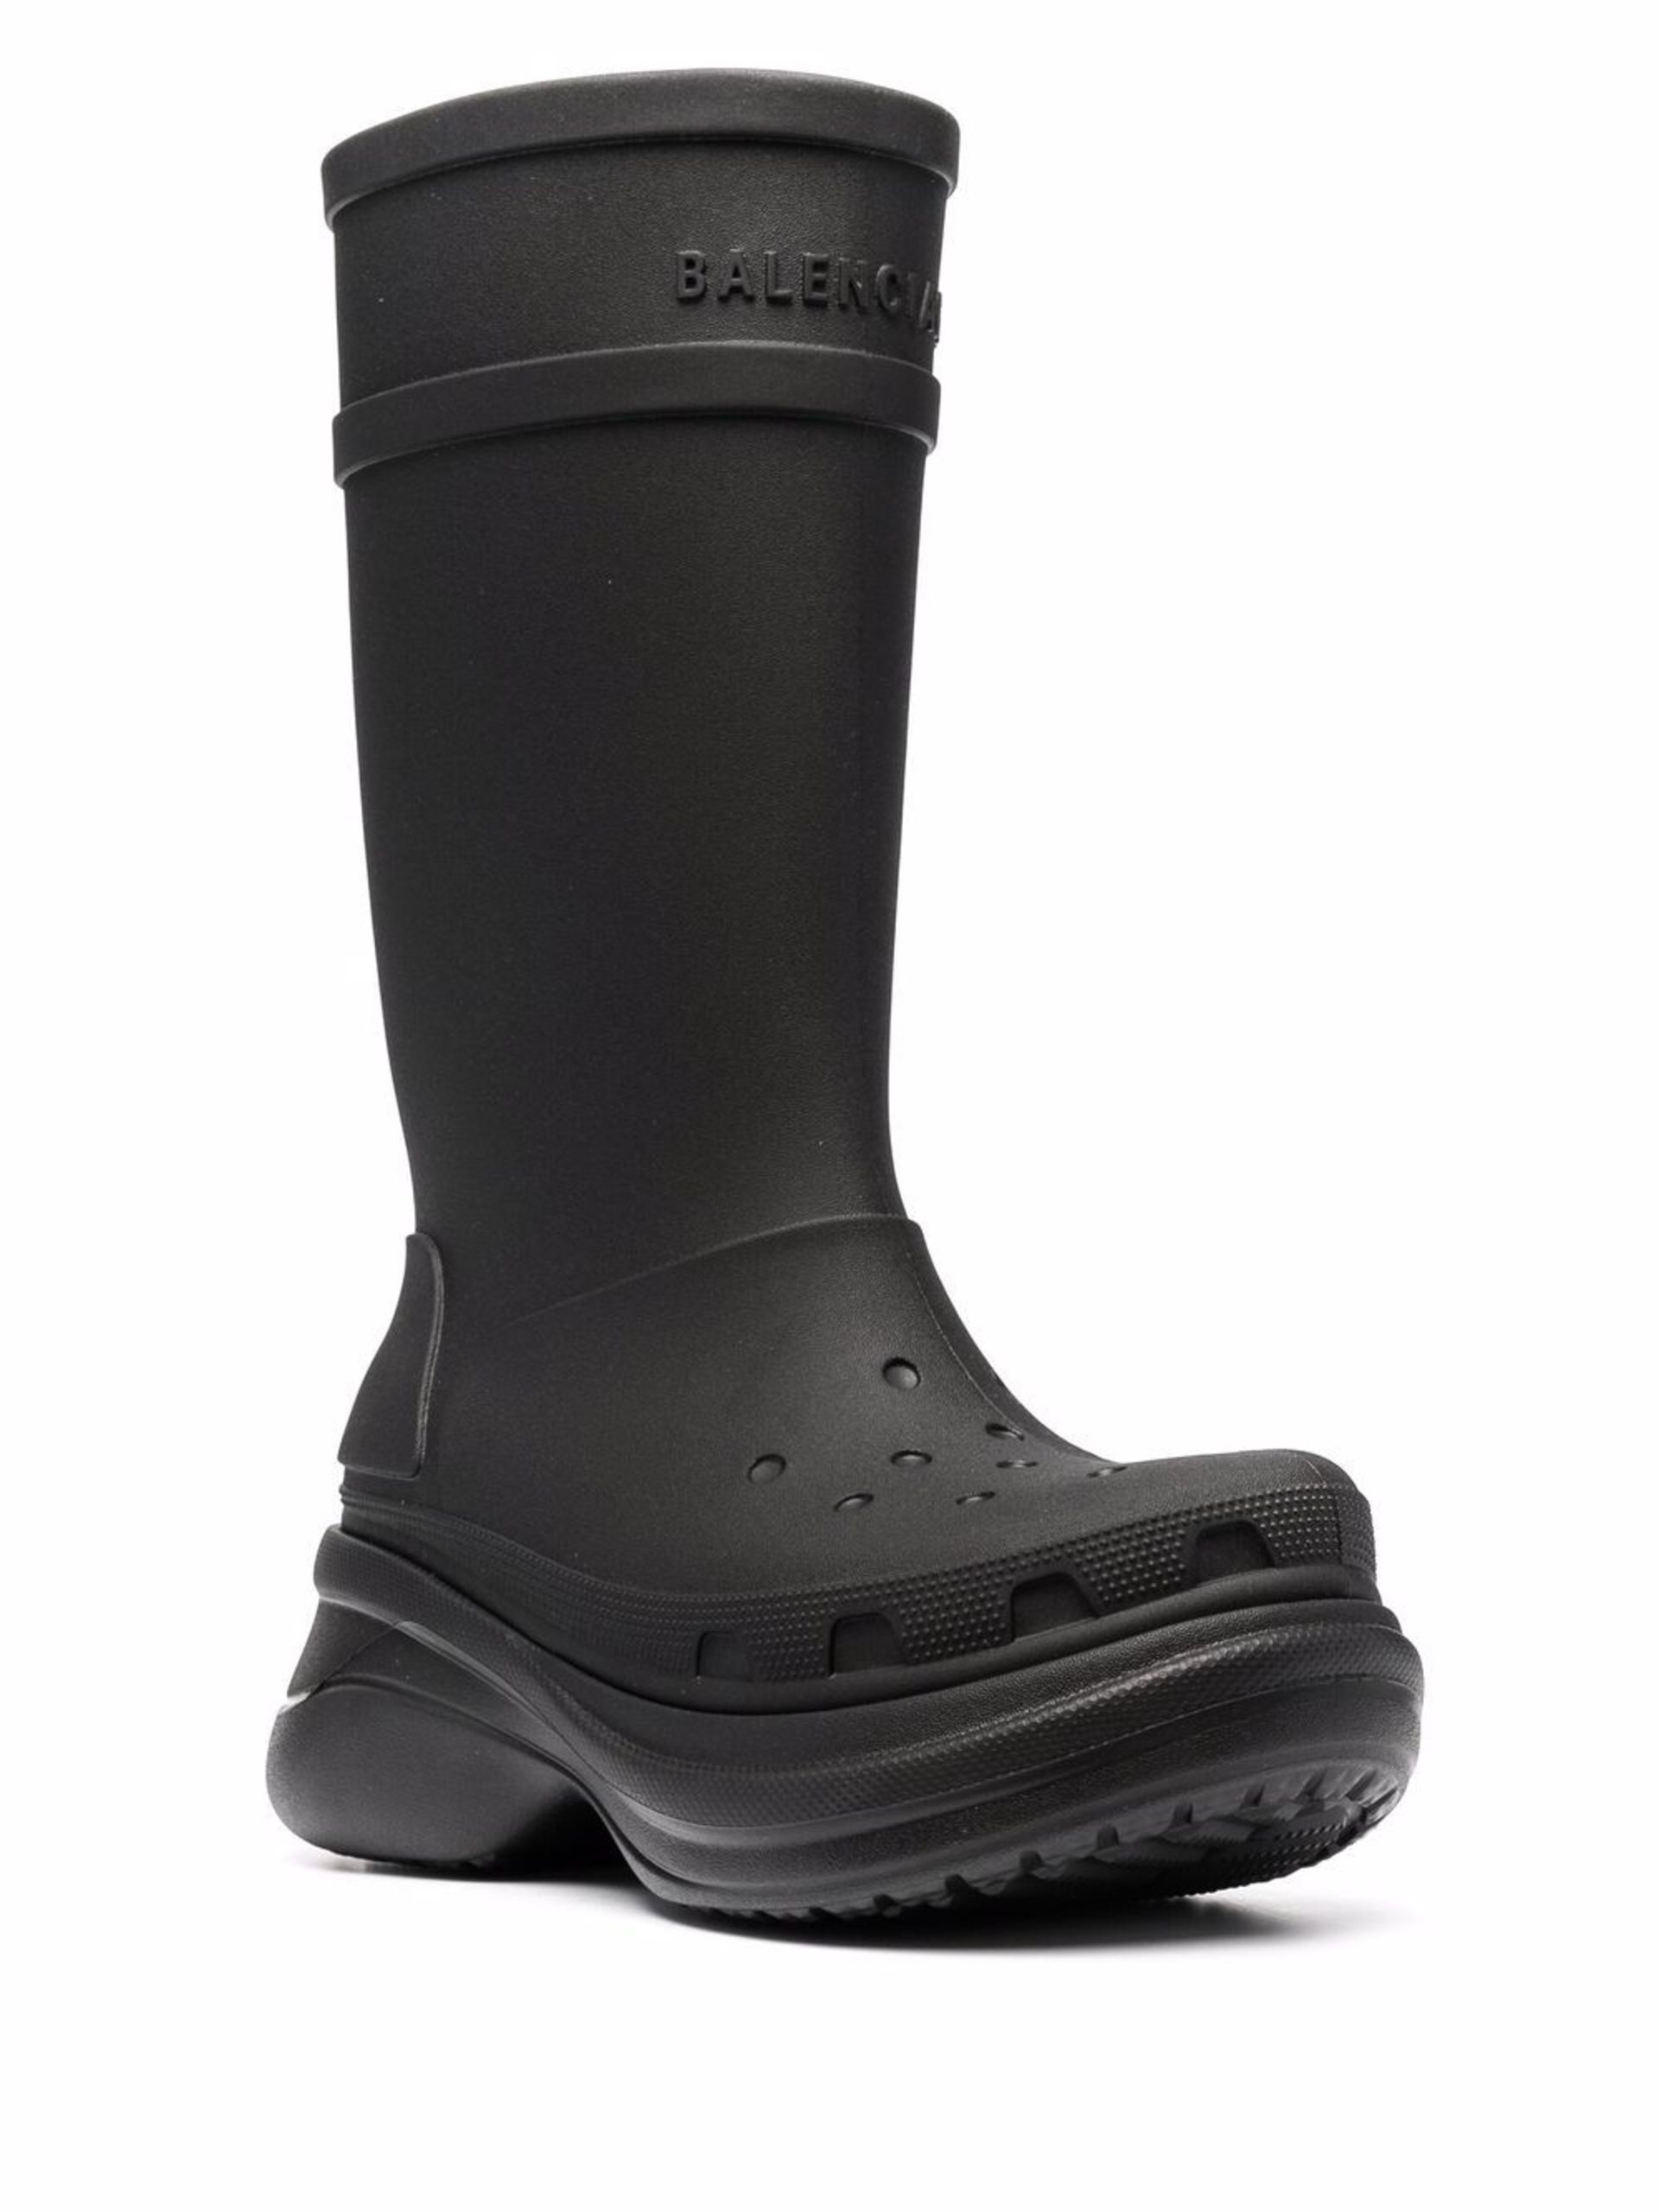 X Crocs Black Rain Boots - 2